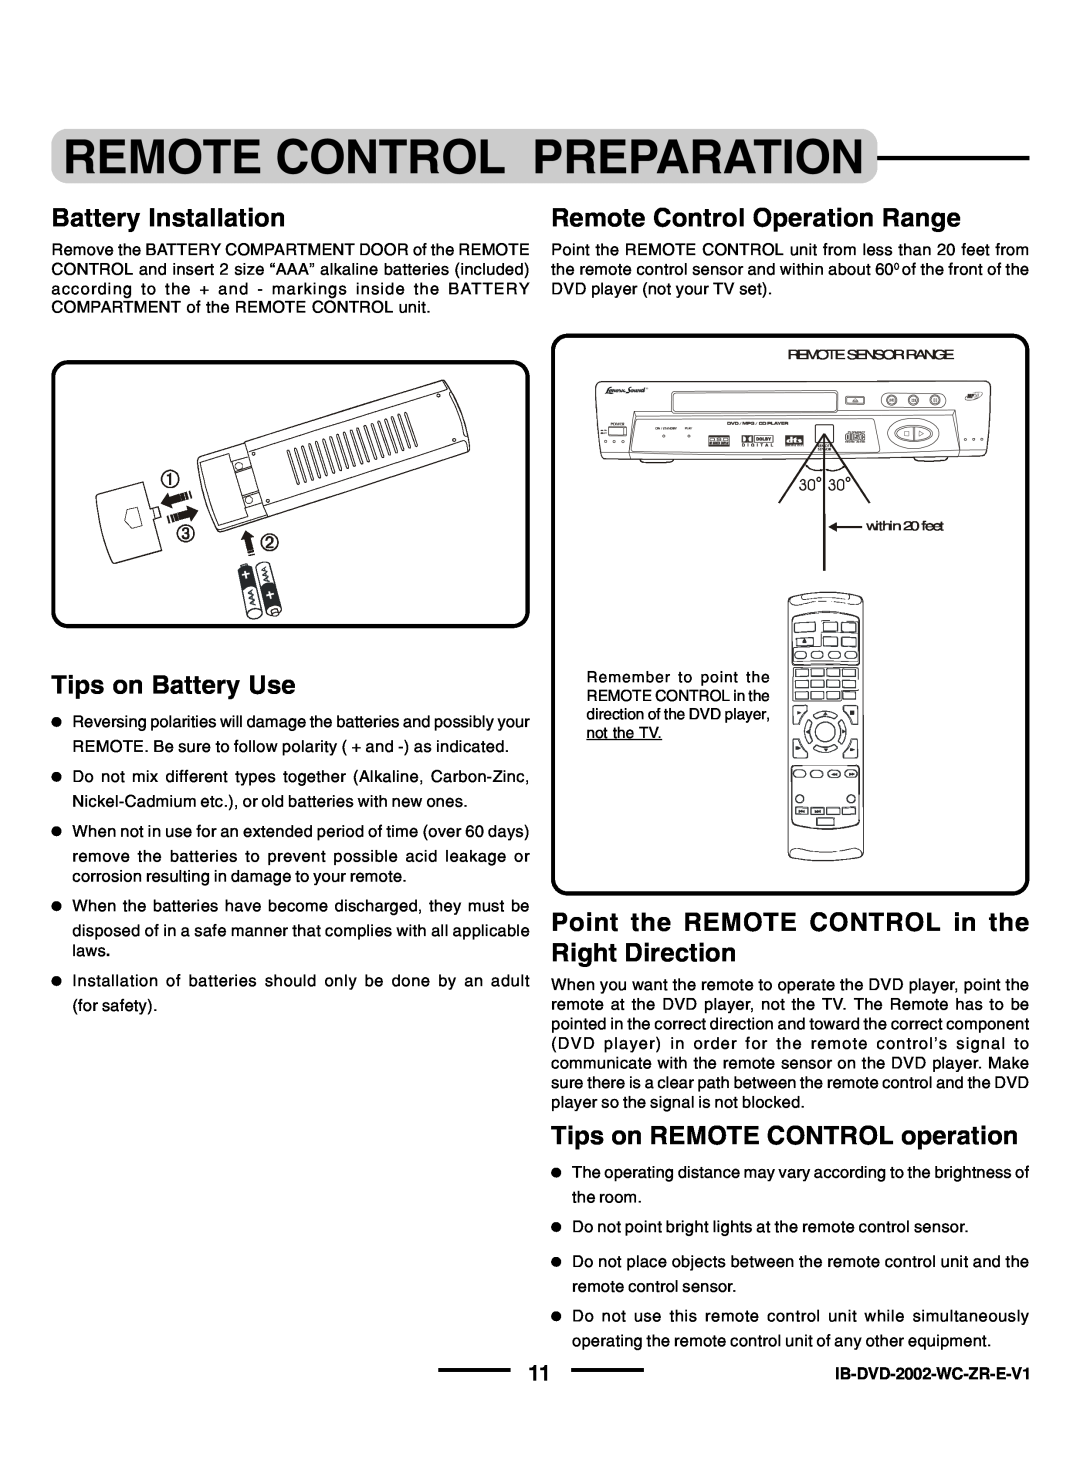 Lenoxx Electronics DVD-2002 Remote Control Preparation, Battery Installation, Remote Control Operation Range 